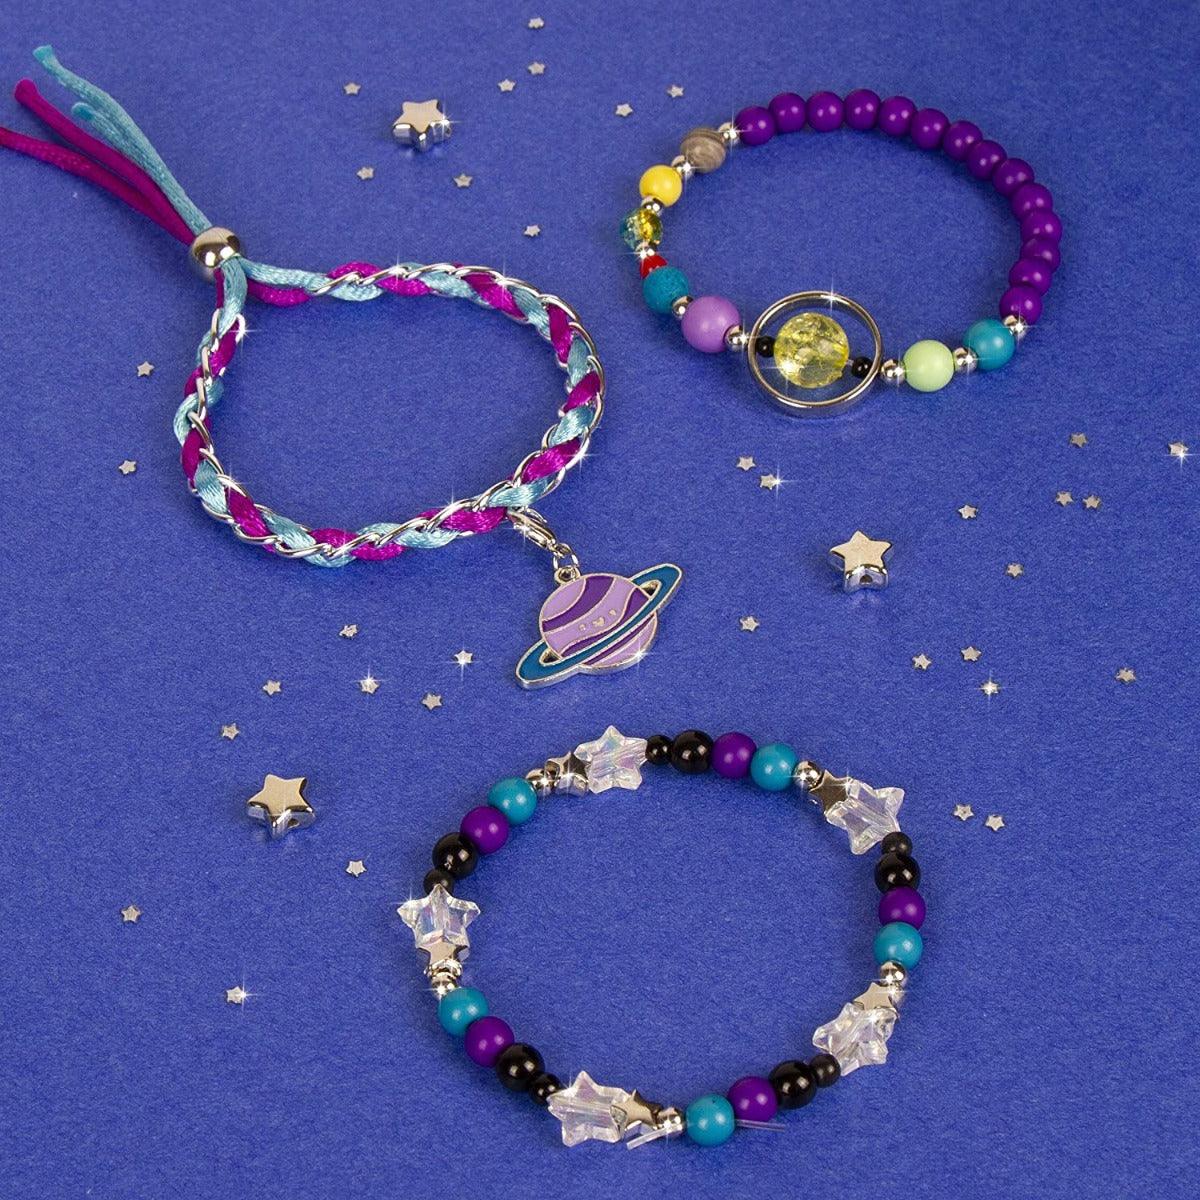 Make It Real Galaxy Jewelry Plastic & Metal Bead Bracelet Kit, Multicolor